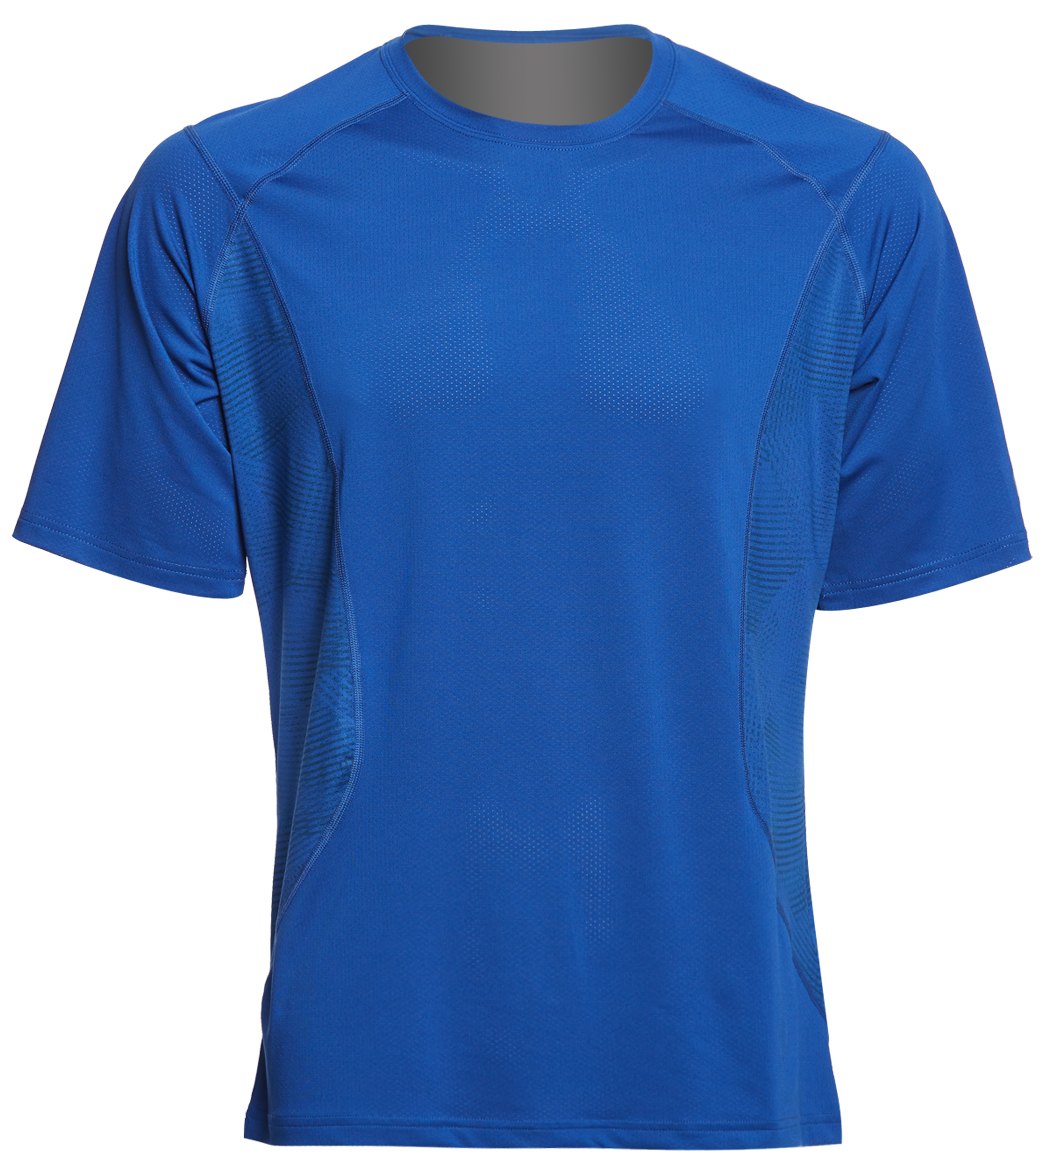 Asics Men's Pr Lyte Printed Short Sleeve Shirt - Limoges/Atmostphere Print Small Polyester/Spandex - Swimoutlet.com